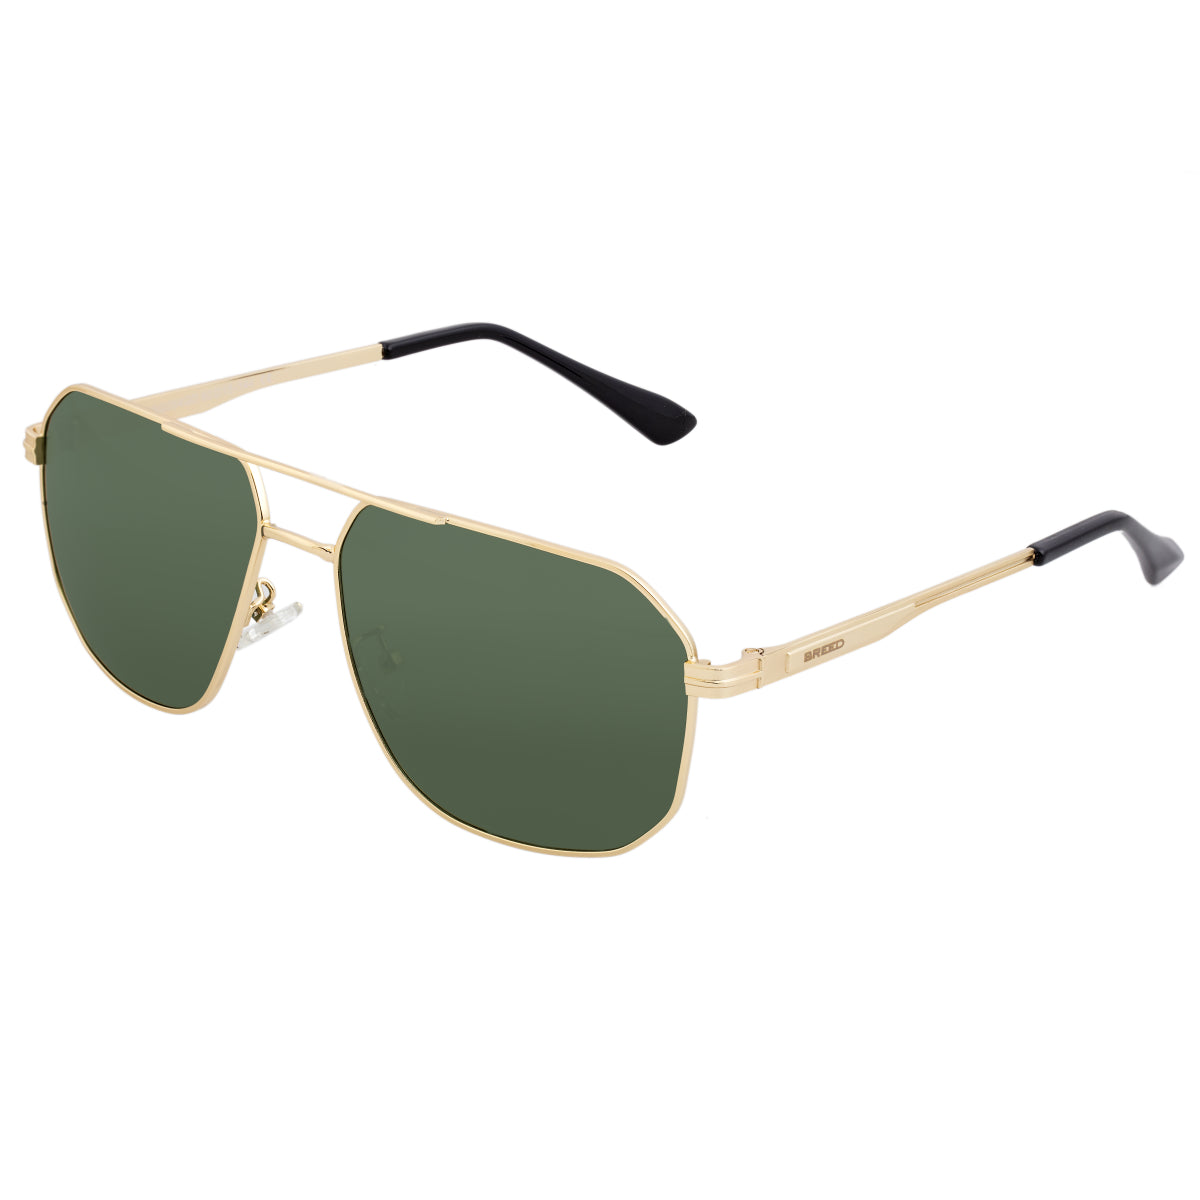 Breed Norma Polarized Sunglasses - Gold/Black - BSG064GD